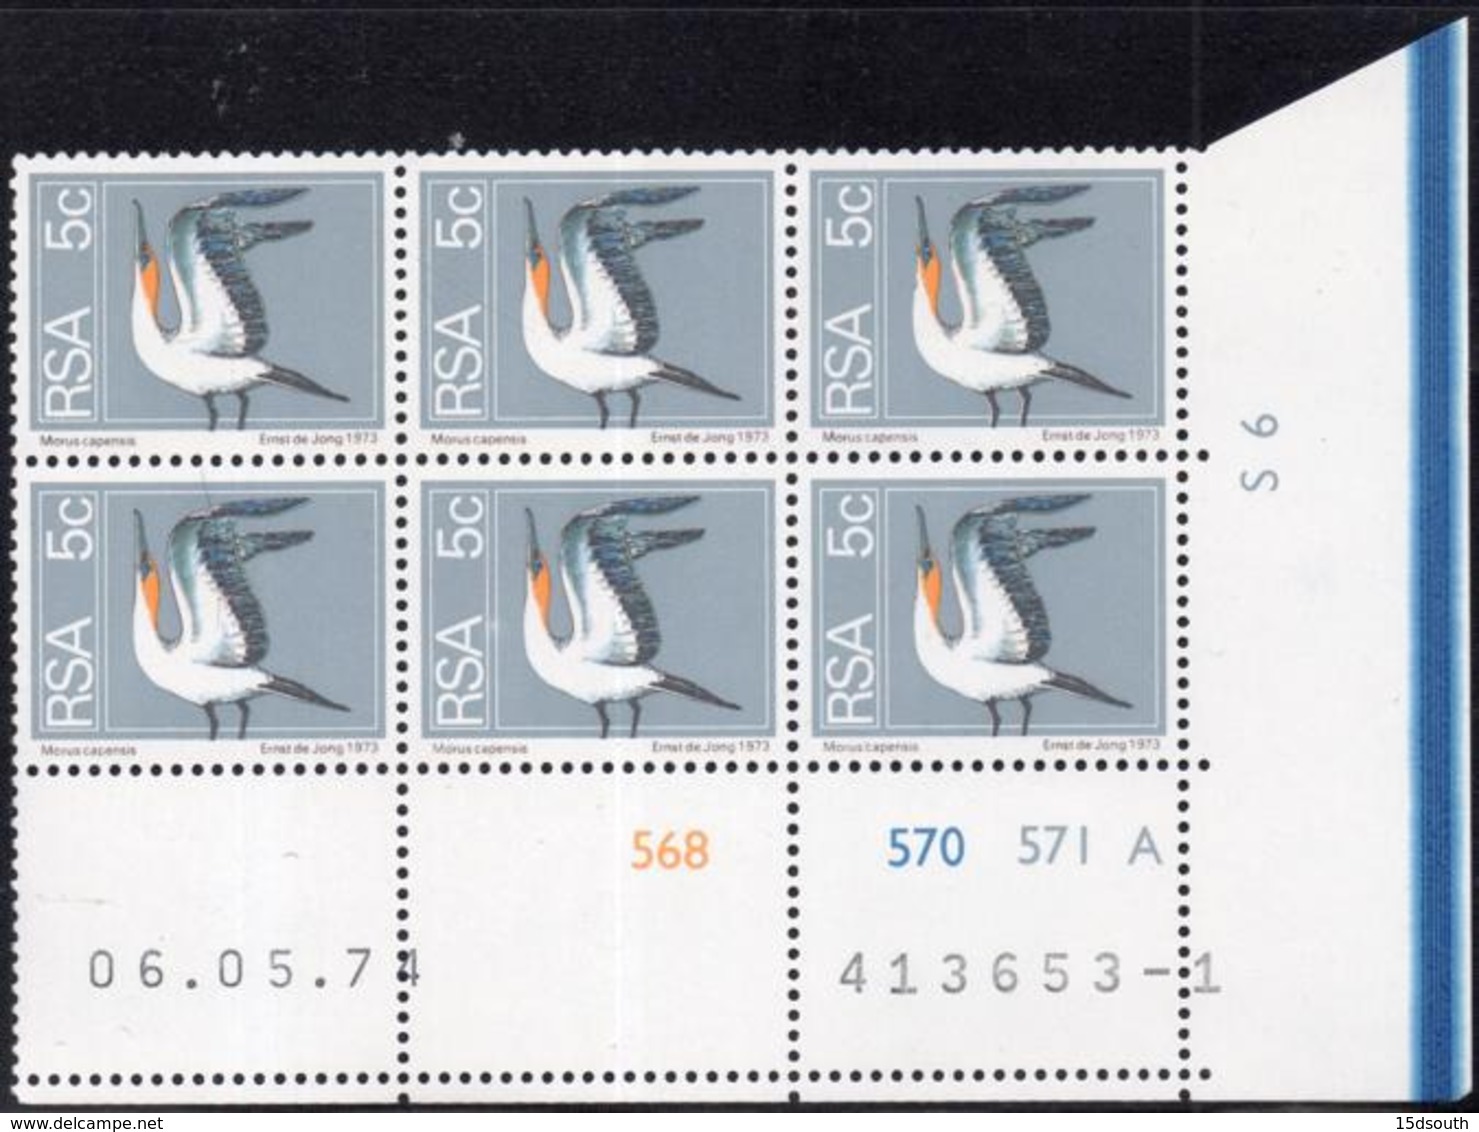 South Africa - 1974 2nd Definitive 5c Gannet Control Block (1974.05.06) Pane A (**) # SG 352 - Blocks & Sheetlets